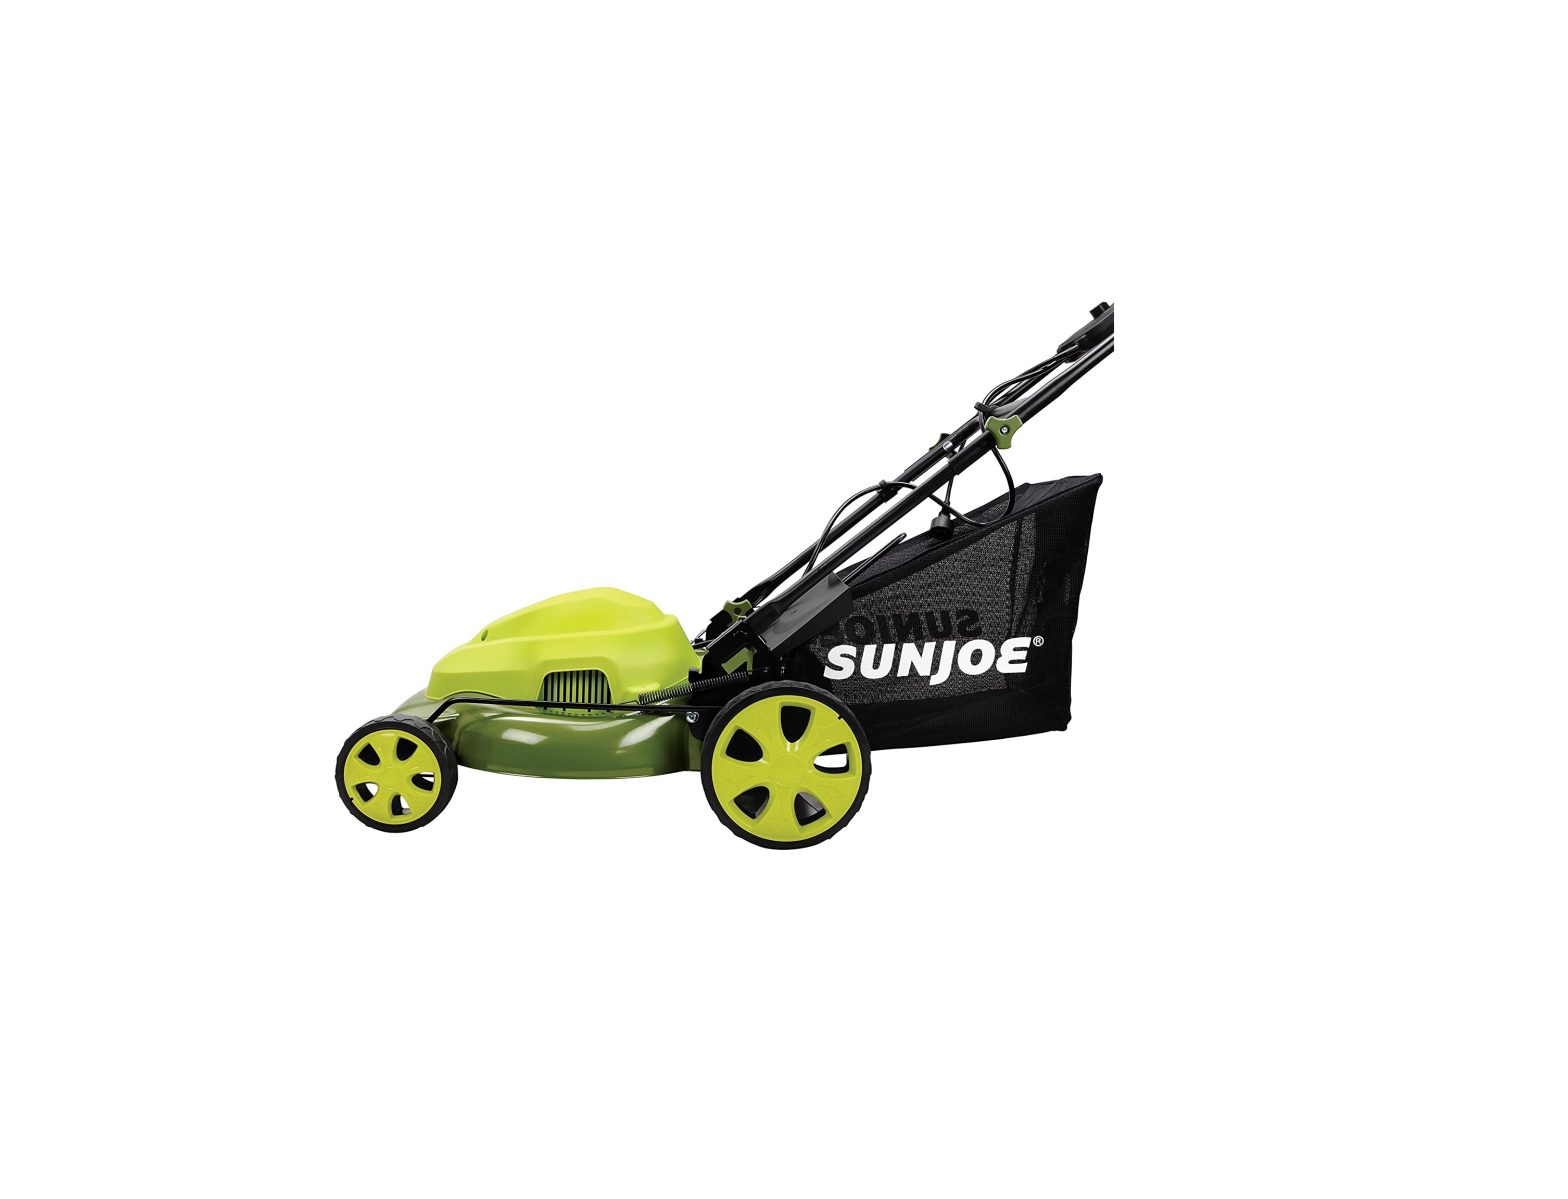 SUNJOE MJ408E-PRO-RM 20 Inch Electric Lawn Mower User Manual